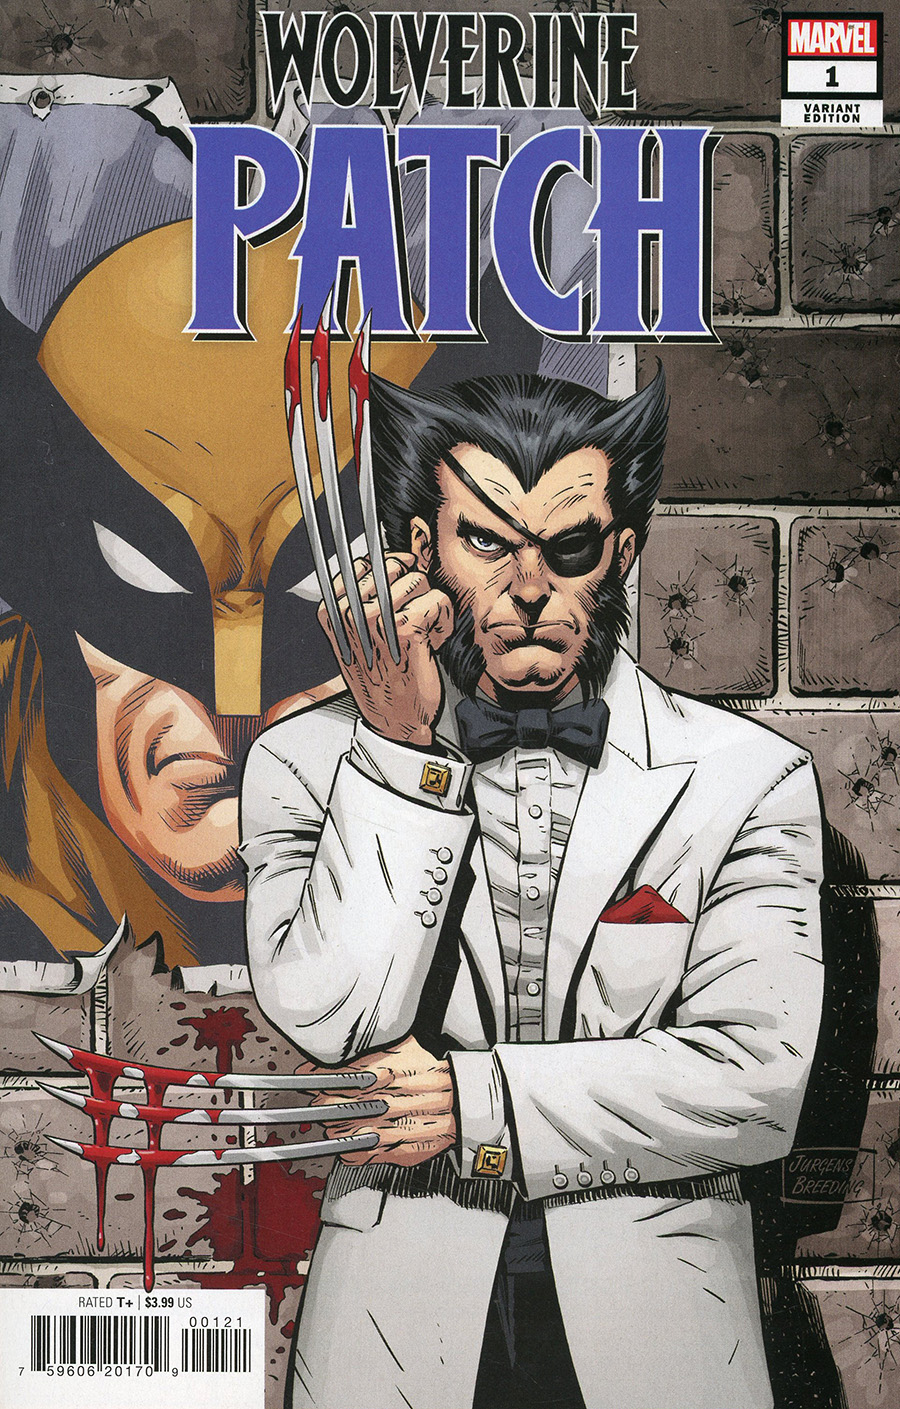 Wolverine: Patch Vol 1 1 | Marvel Database | Fandom